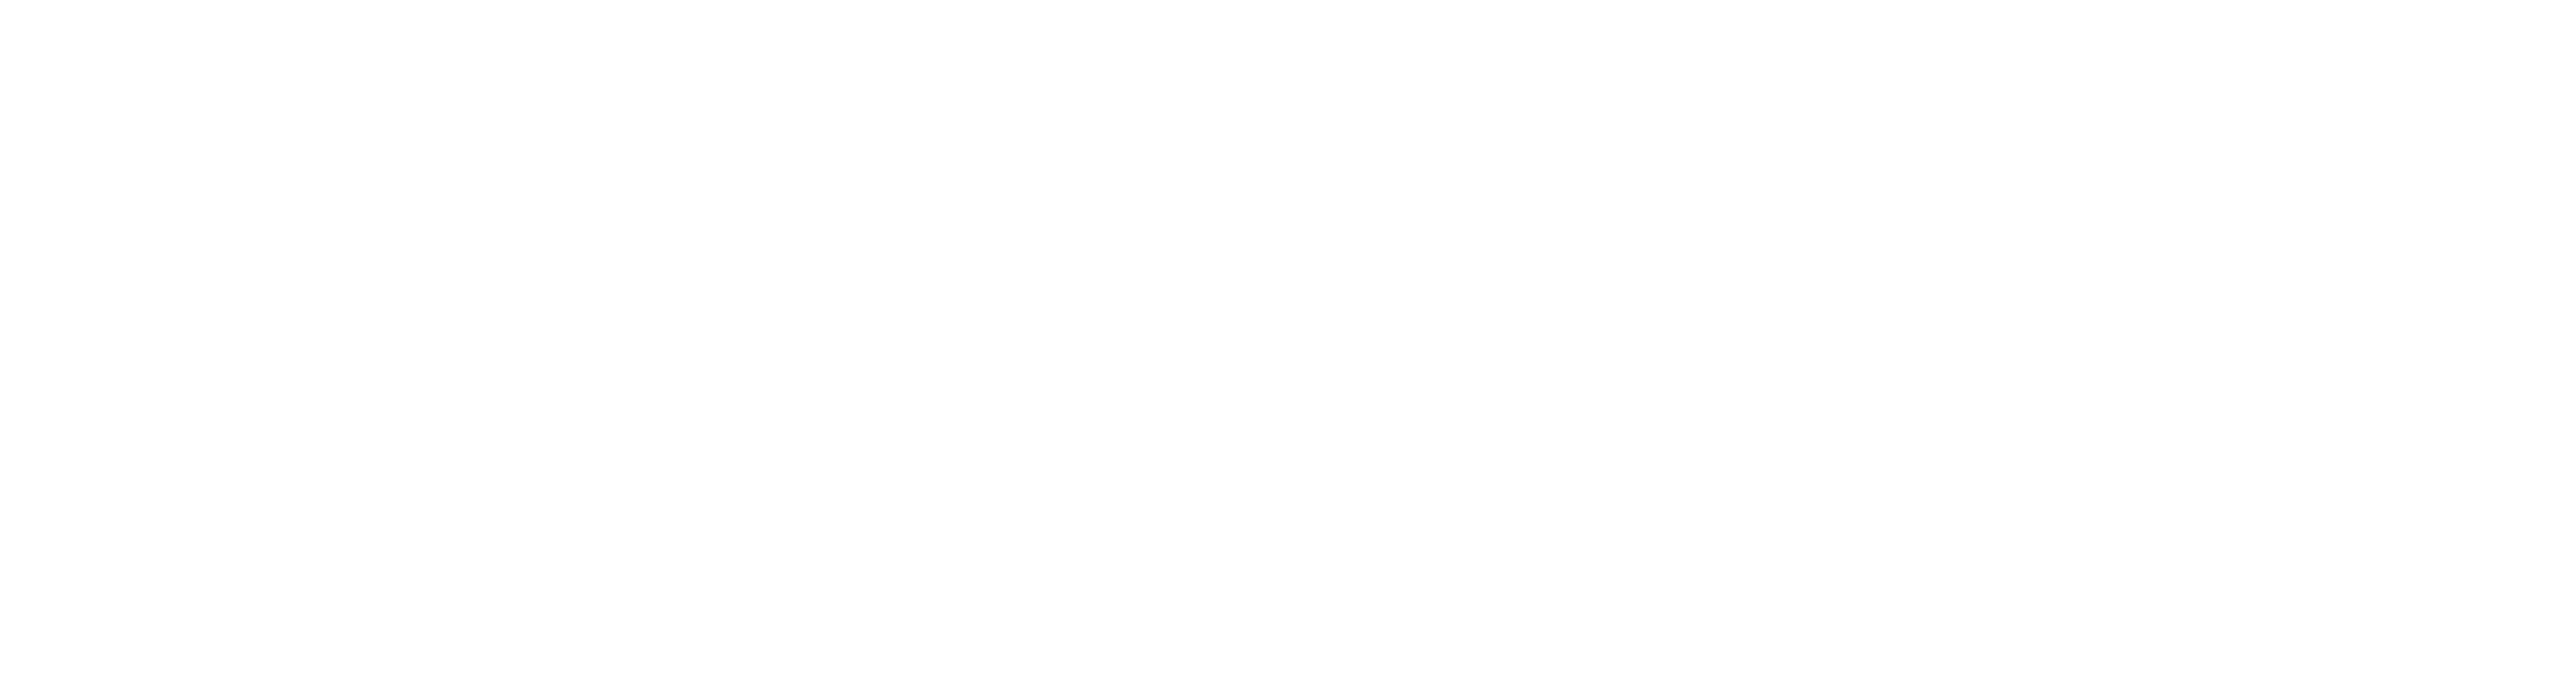 Forest Hill Church